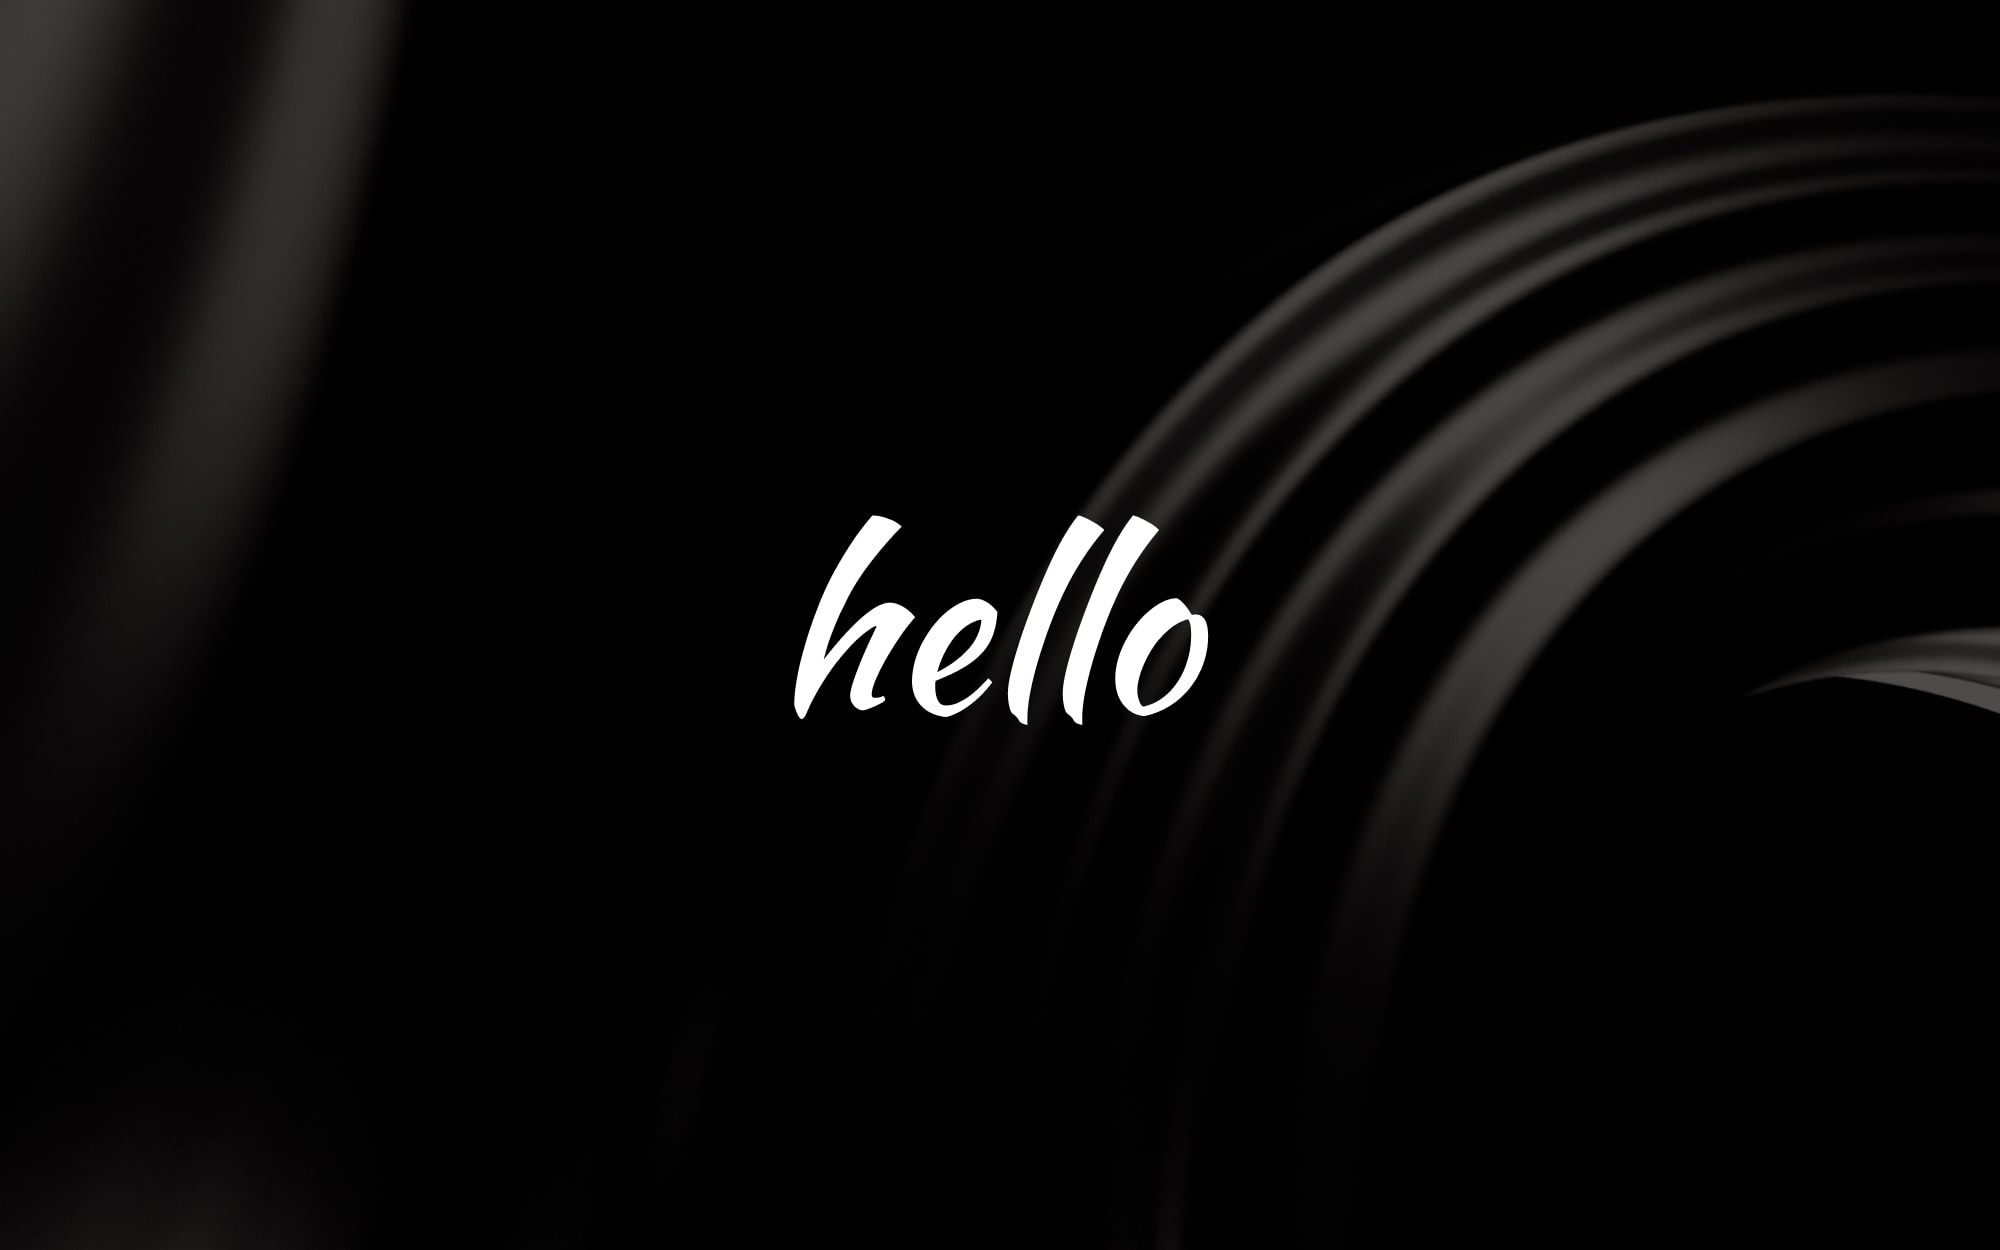 'Hello' written above a black background